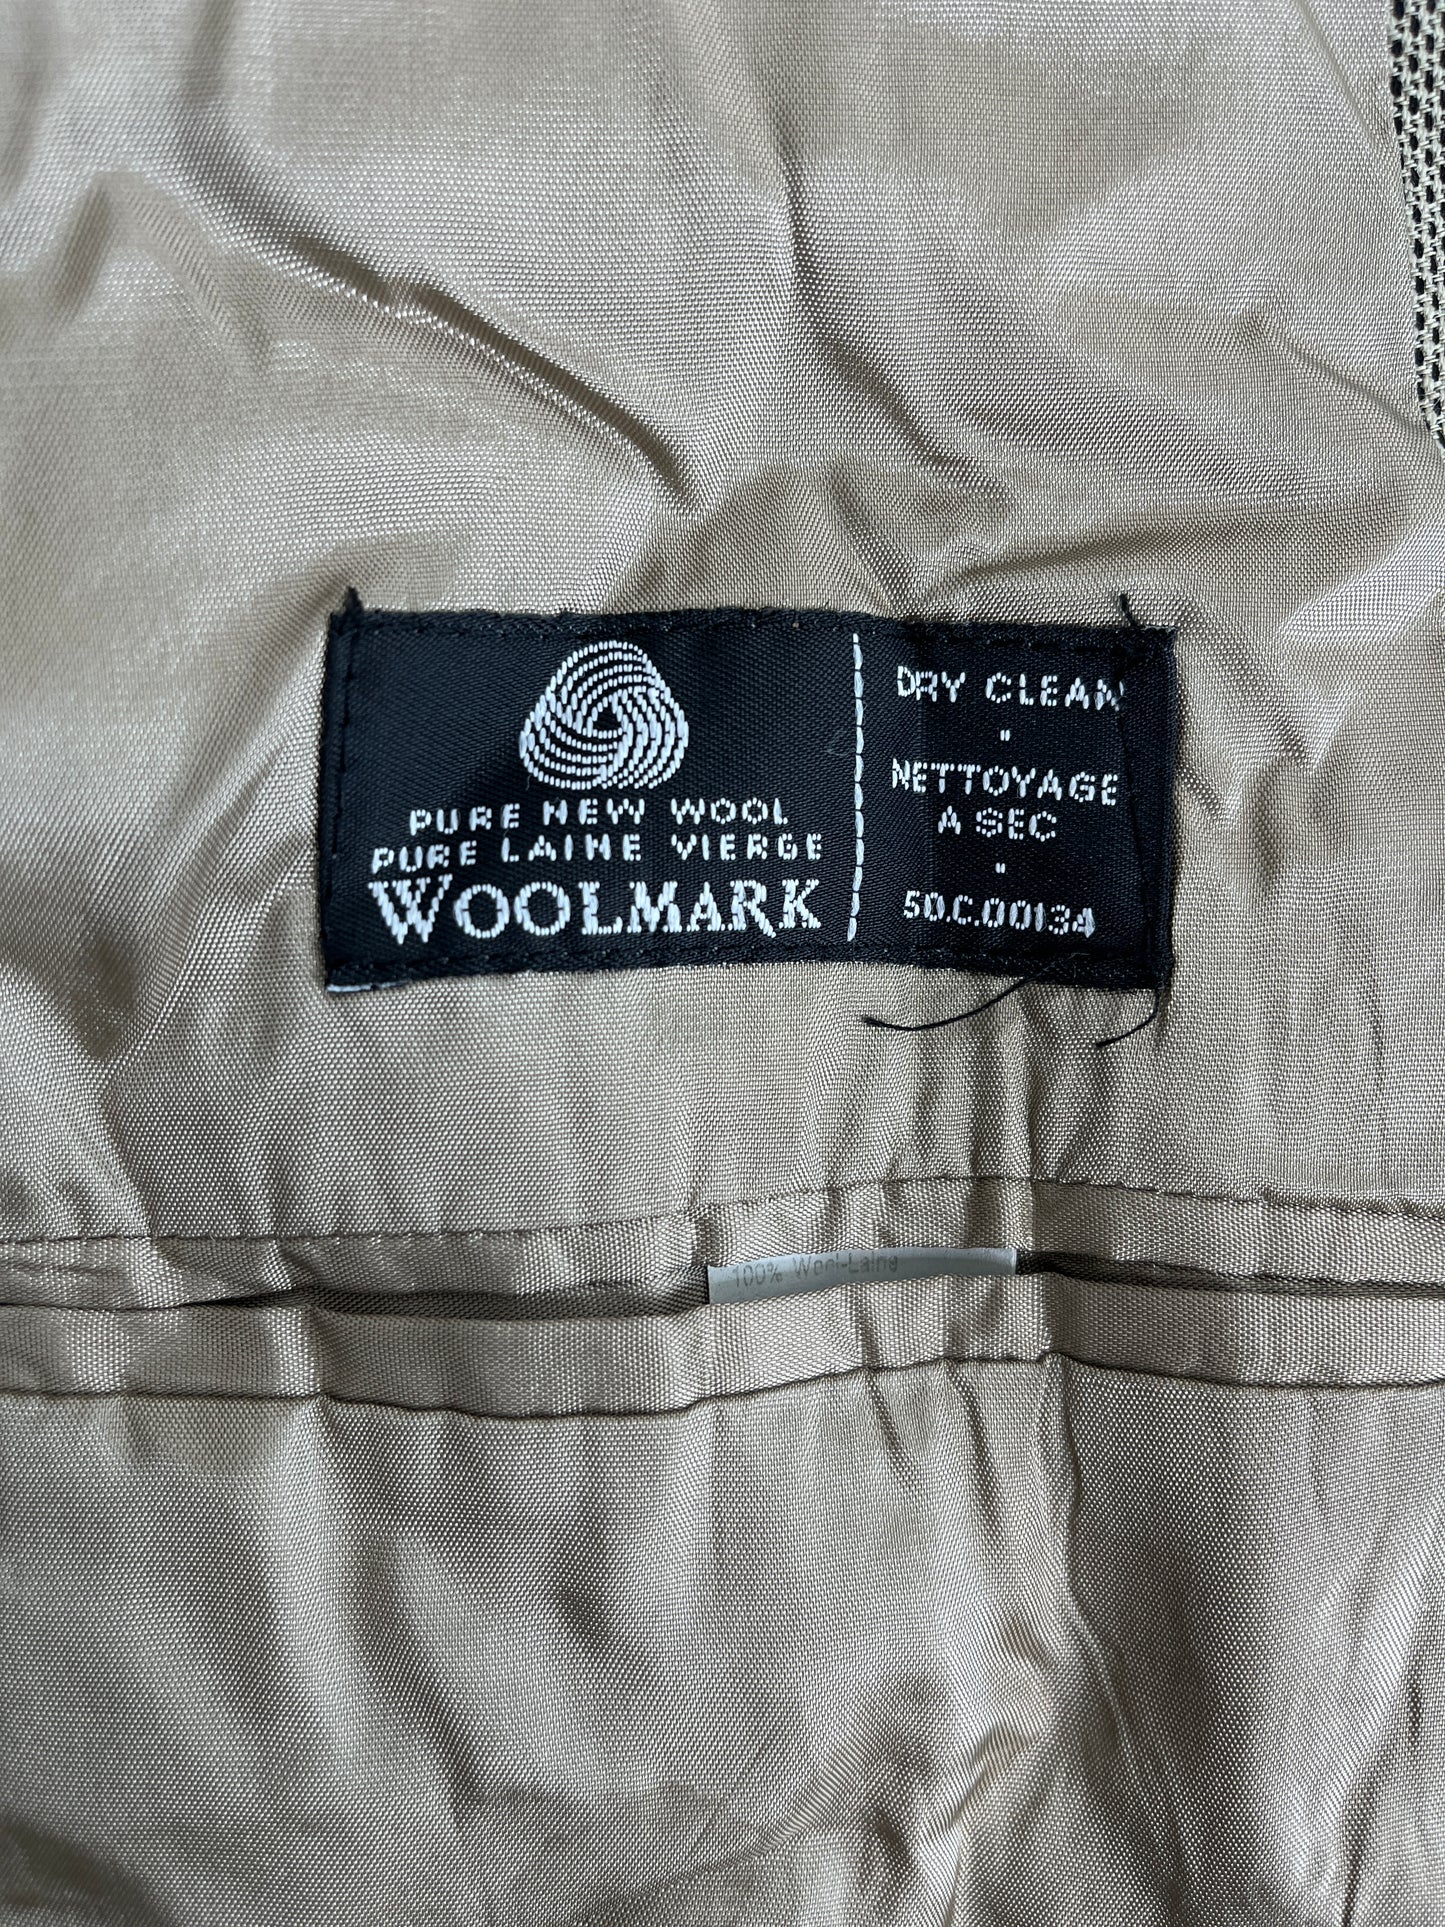 Calvin Klein Men's Jacket Tan Size M SKU 000441